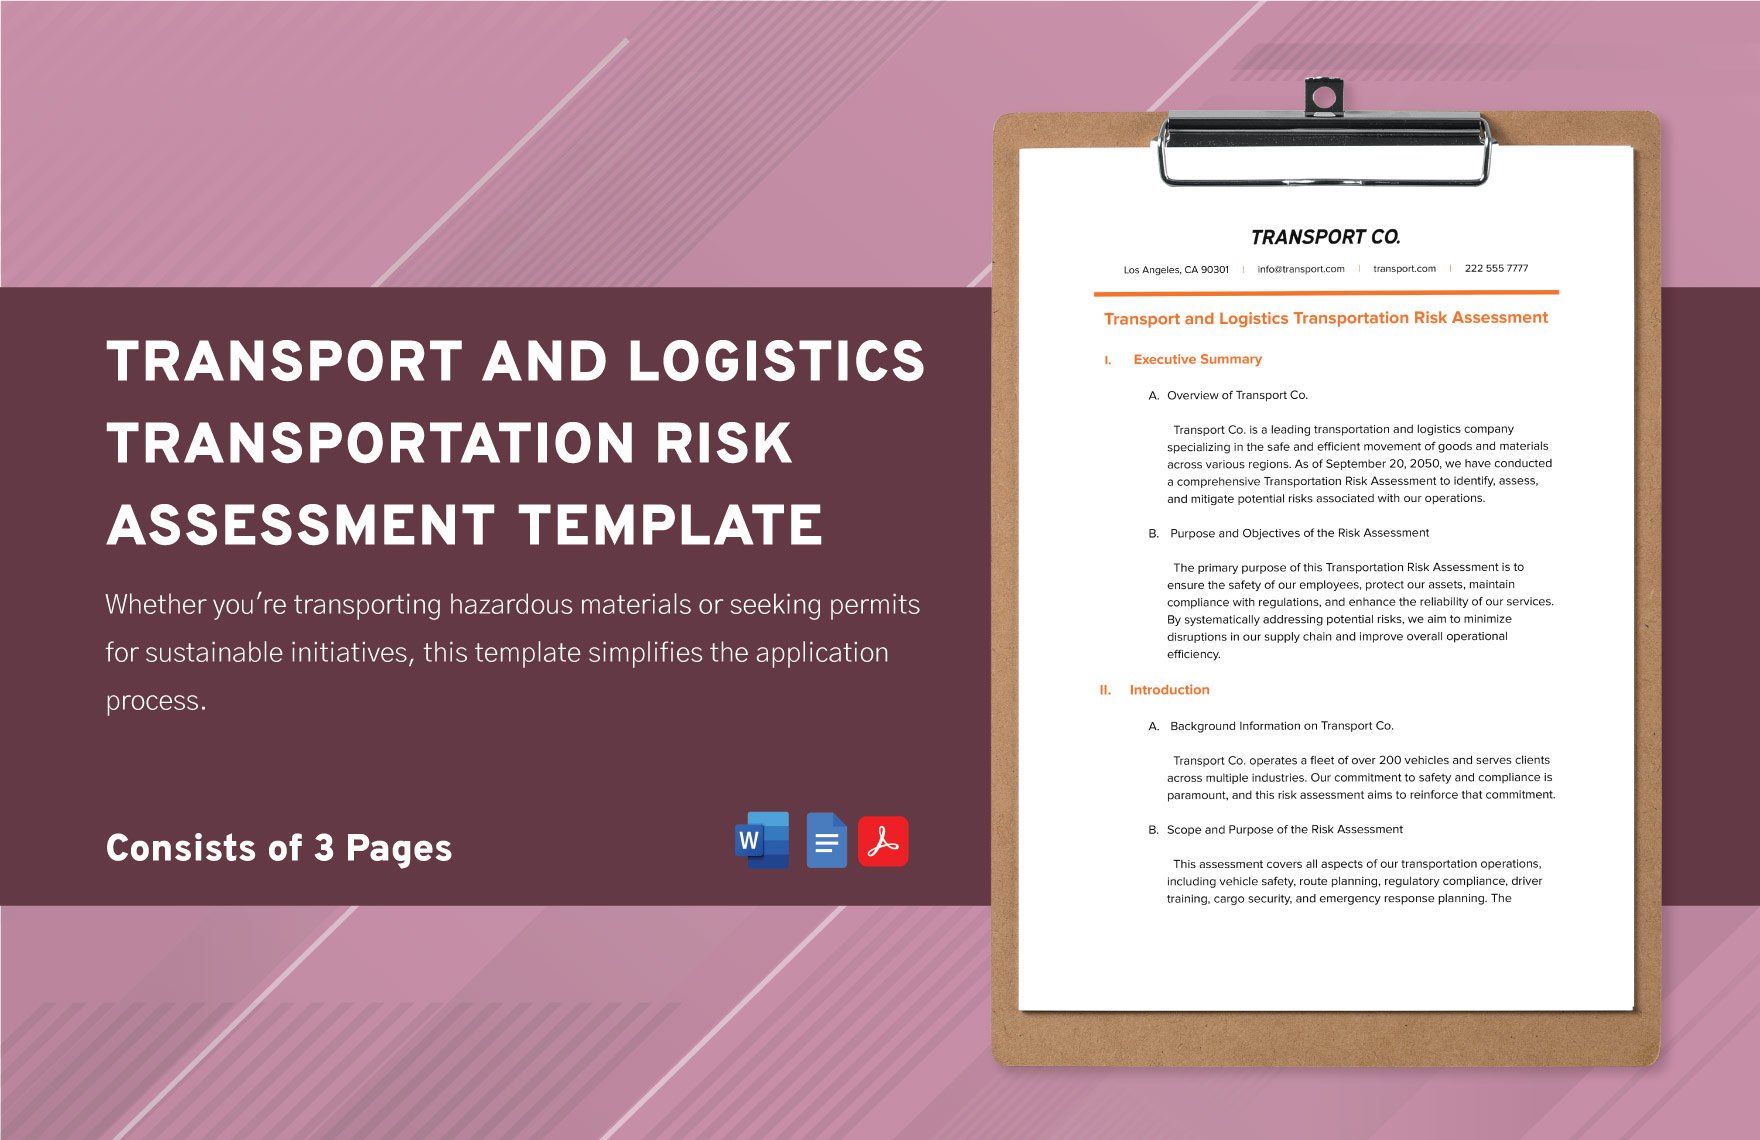 Transport and Logistics Transportation Risk Assessment Template